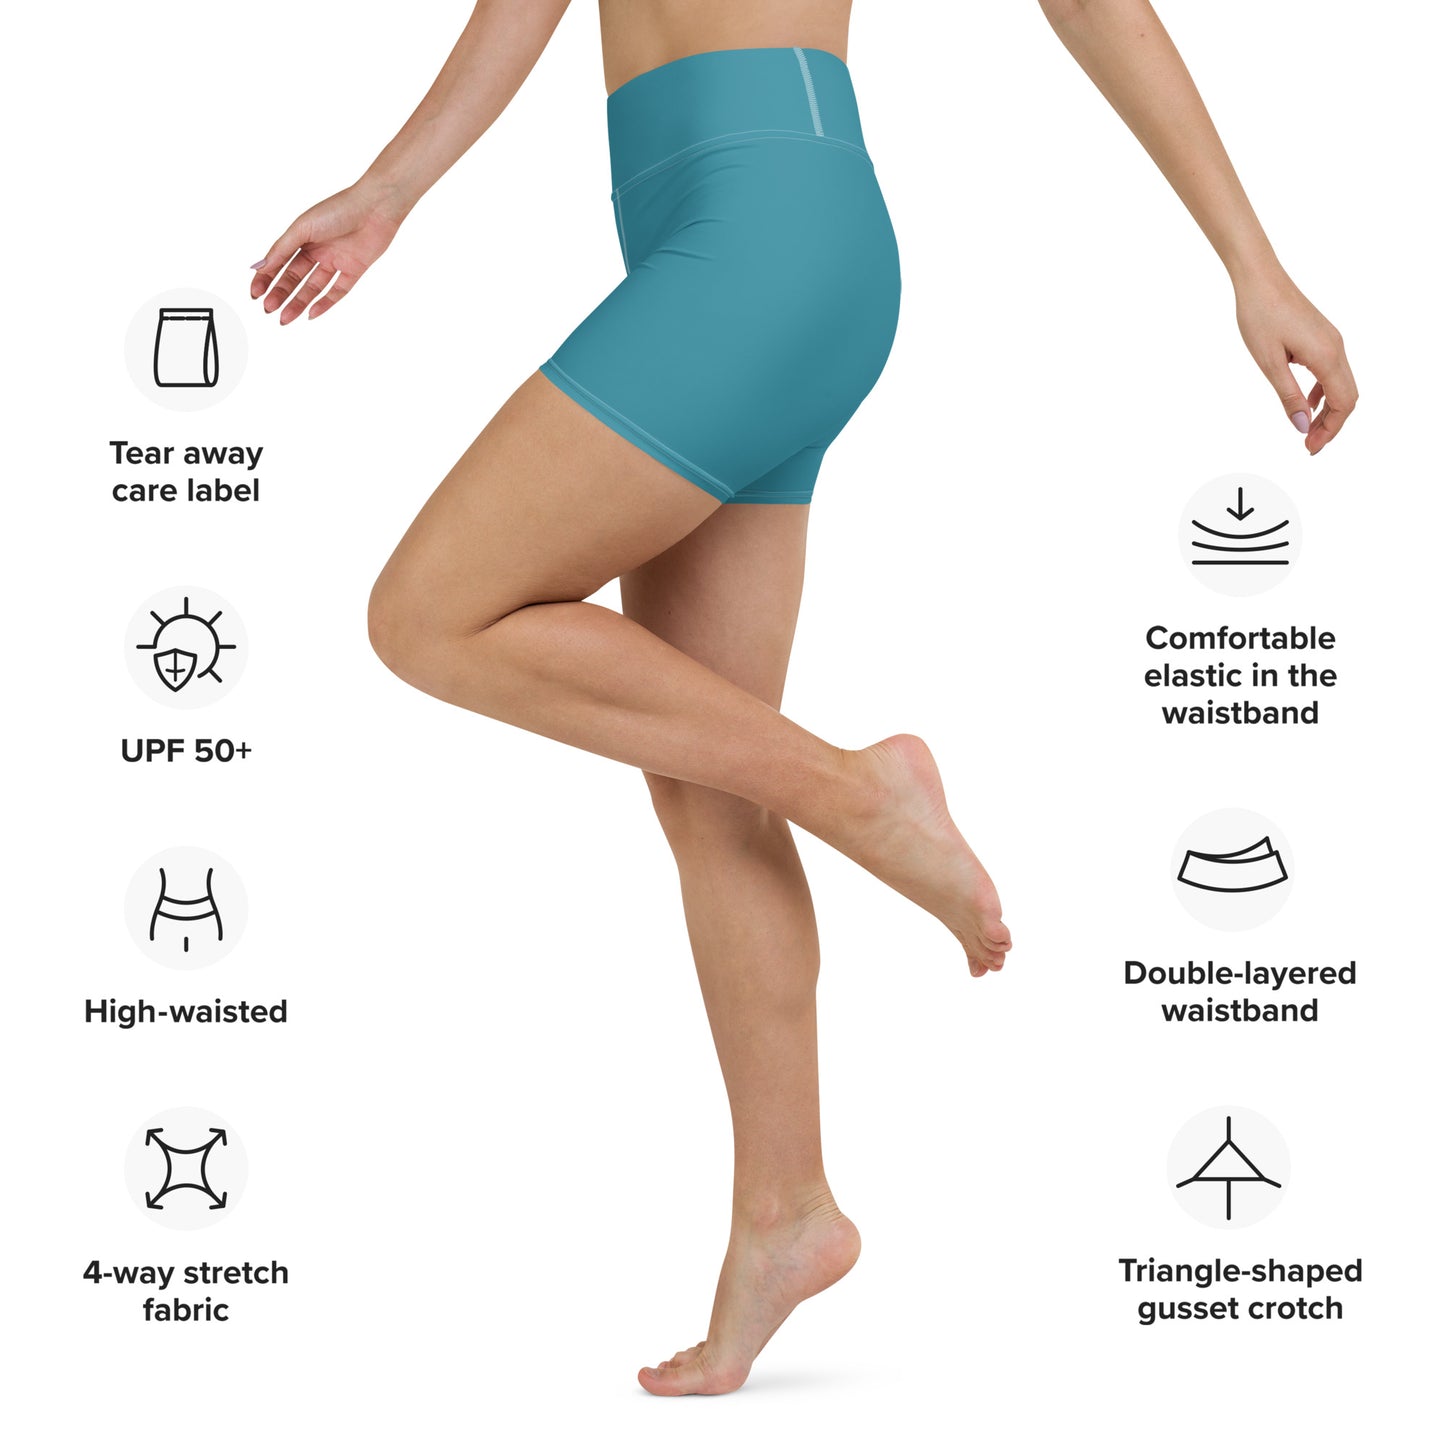 Tulpe Solid Blue High Waist Yoga Shorts / Bike Shorts with Inside Pocket